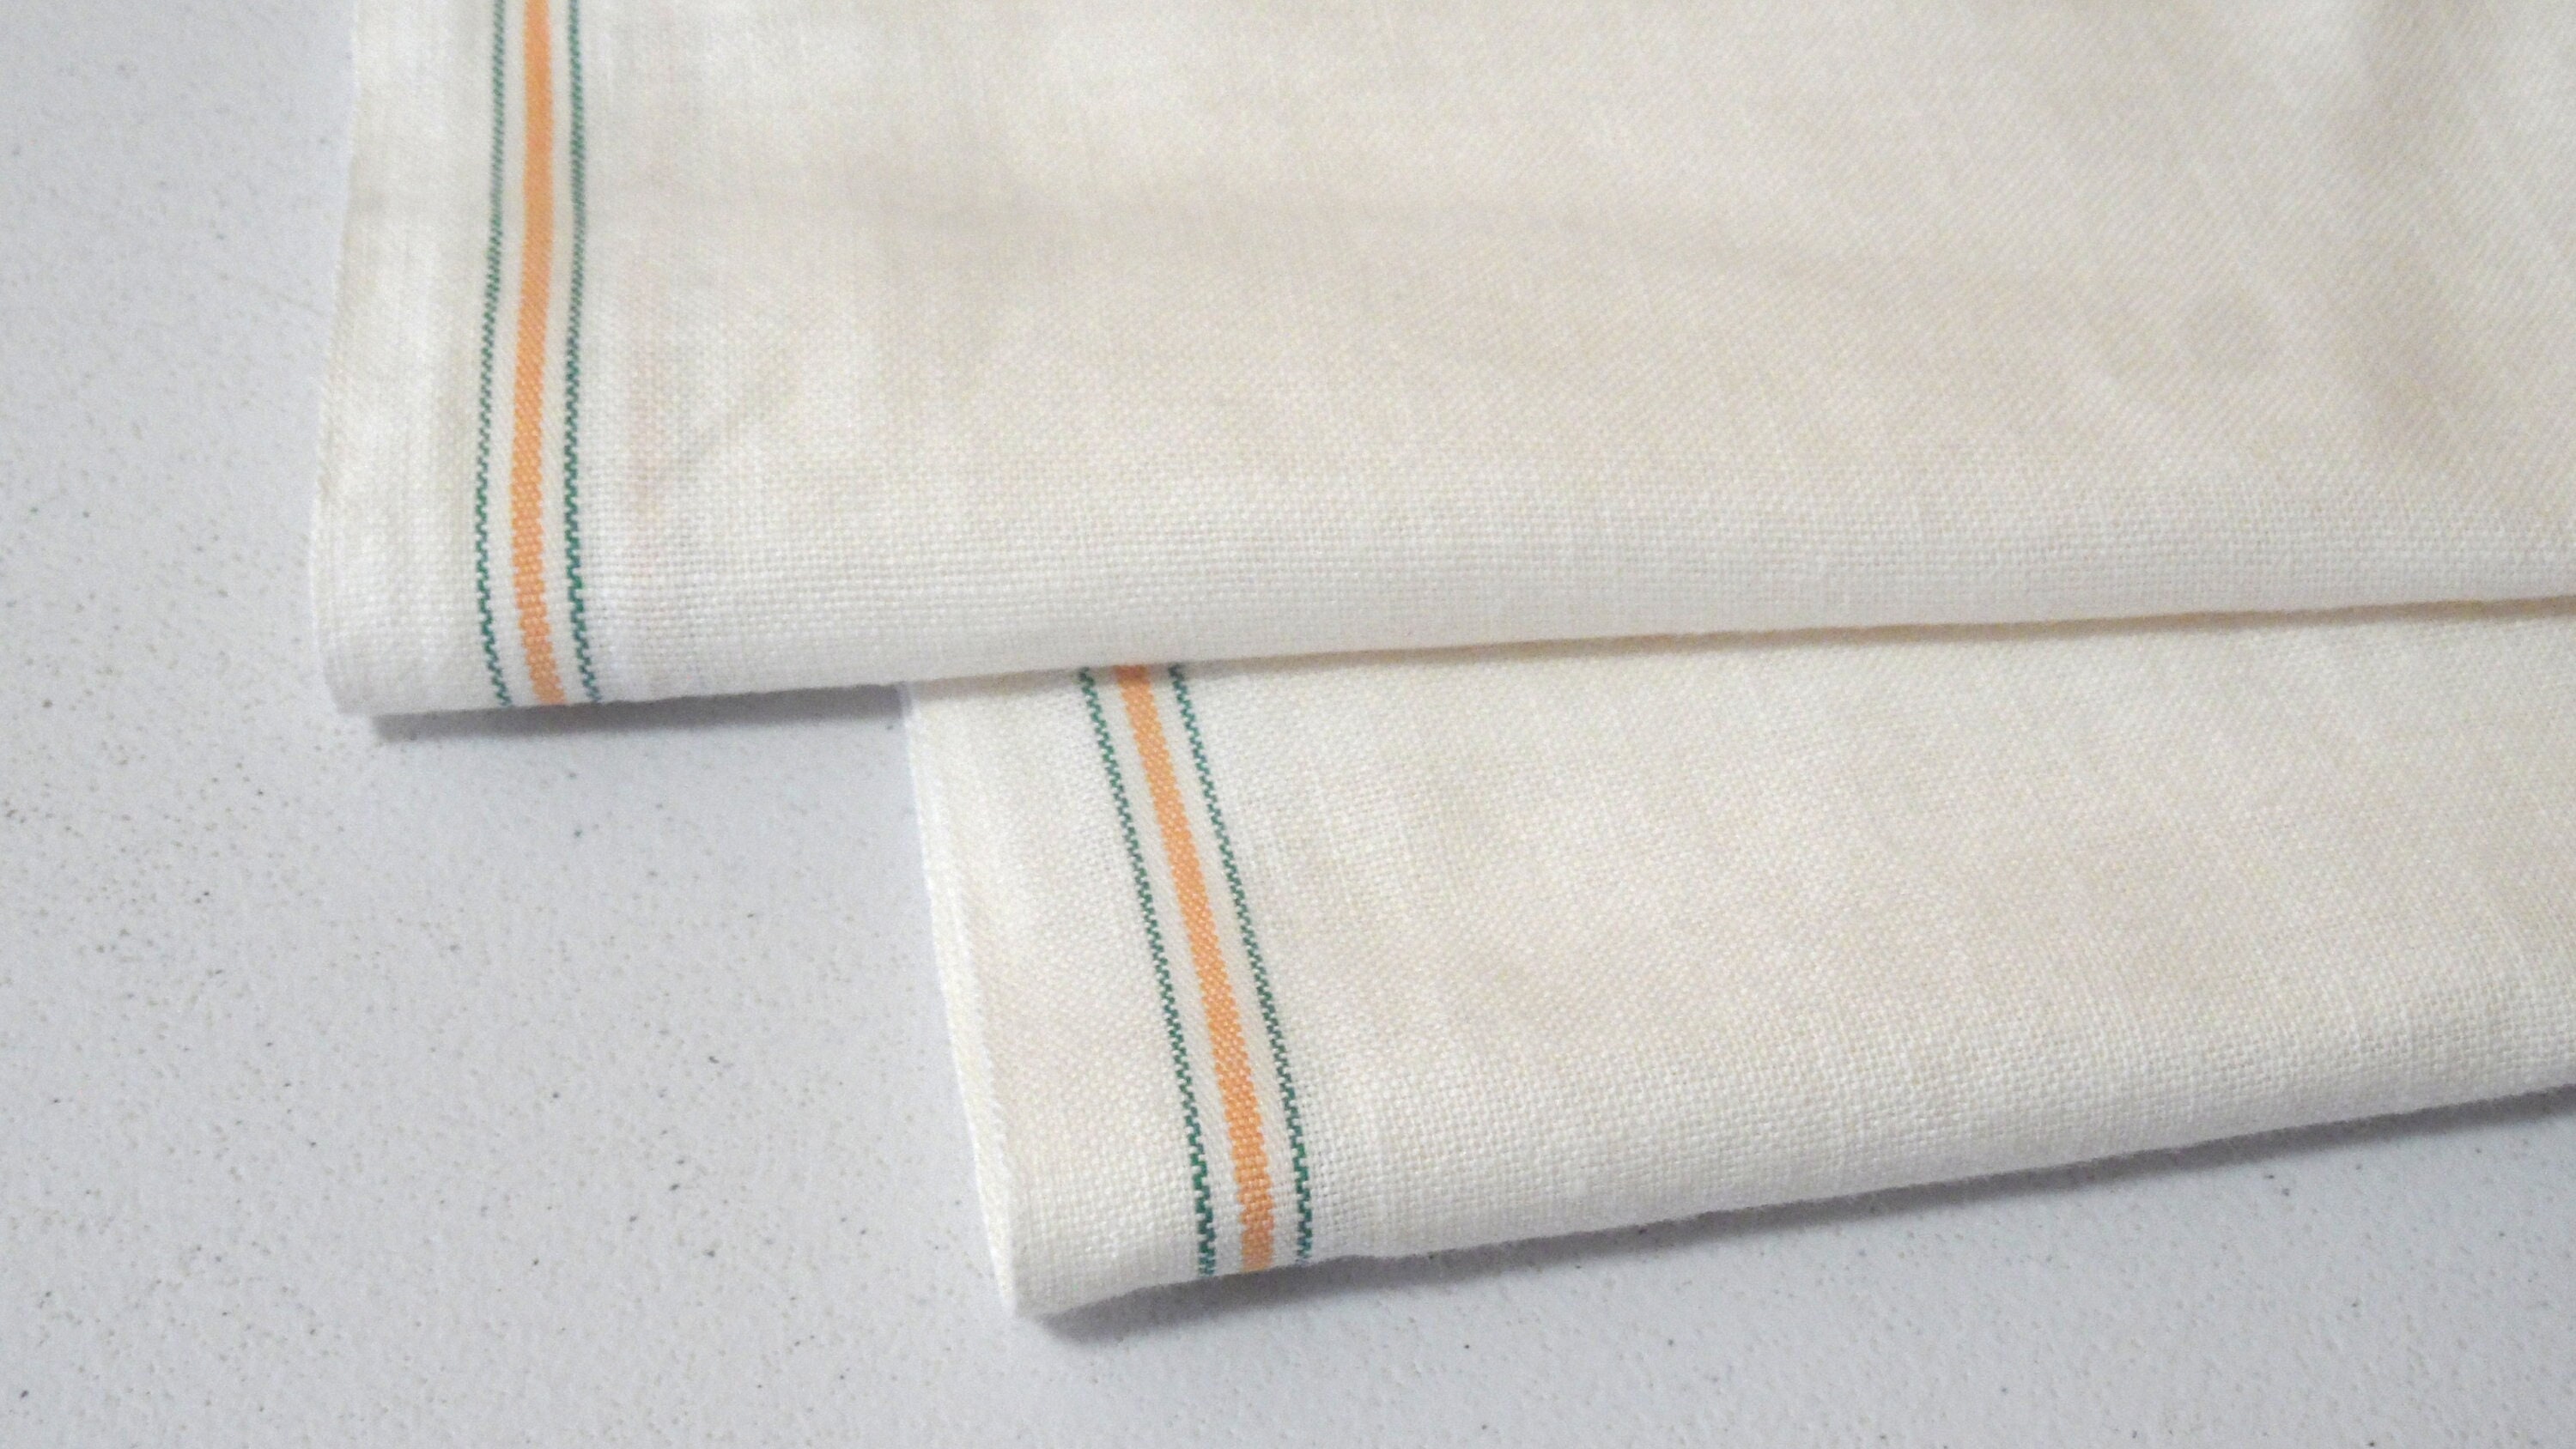 Craft Basics Cotton White Huck Towel 13 x 26